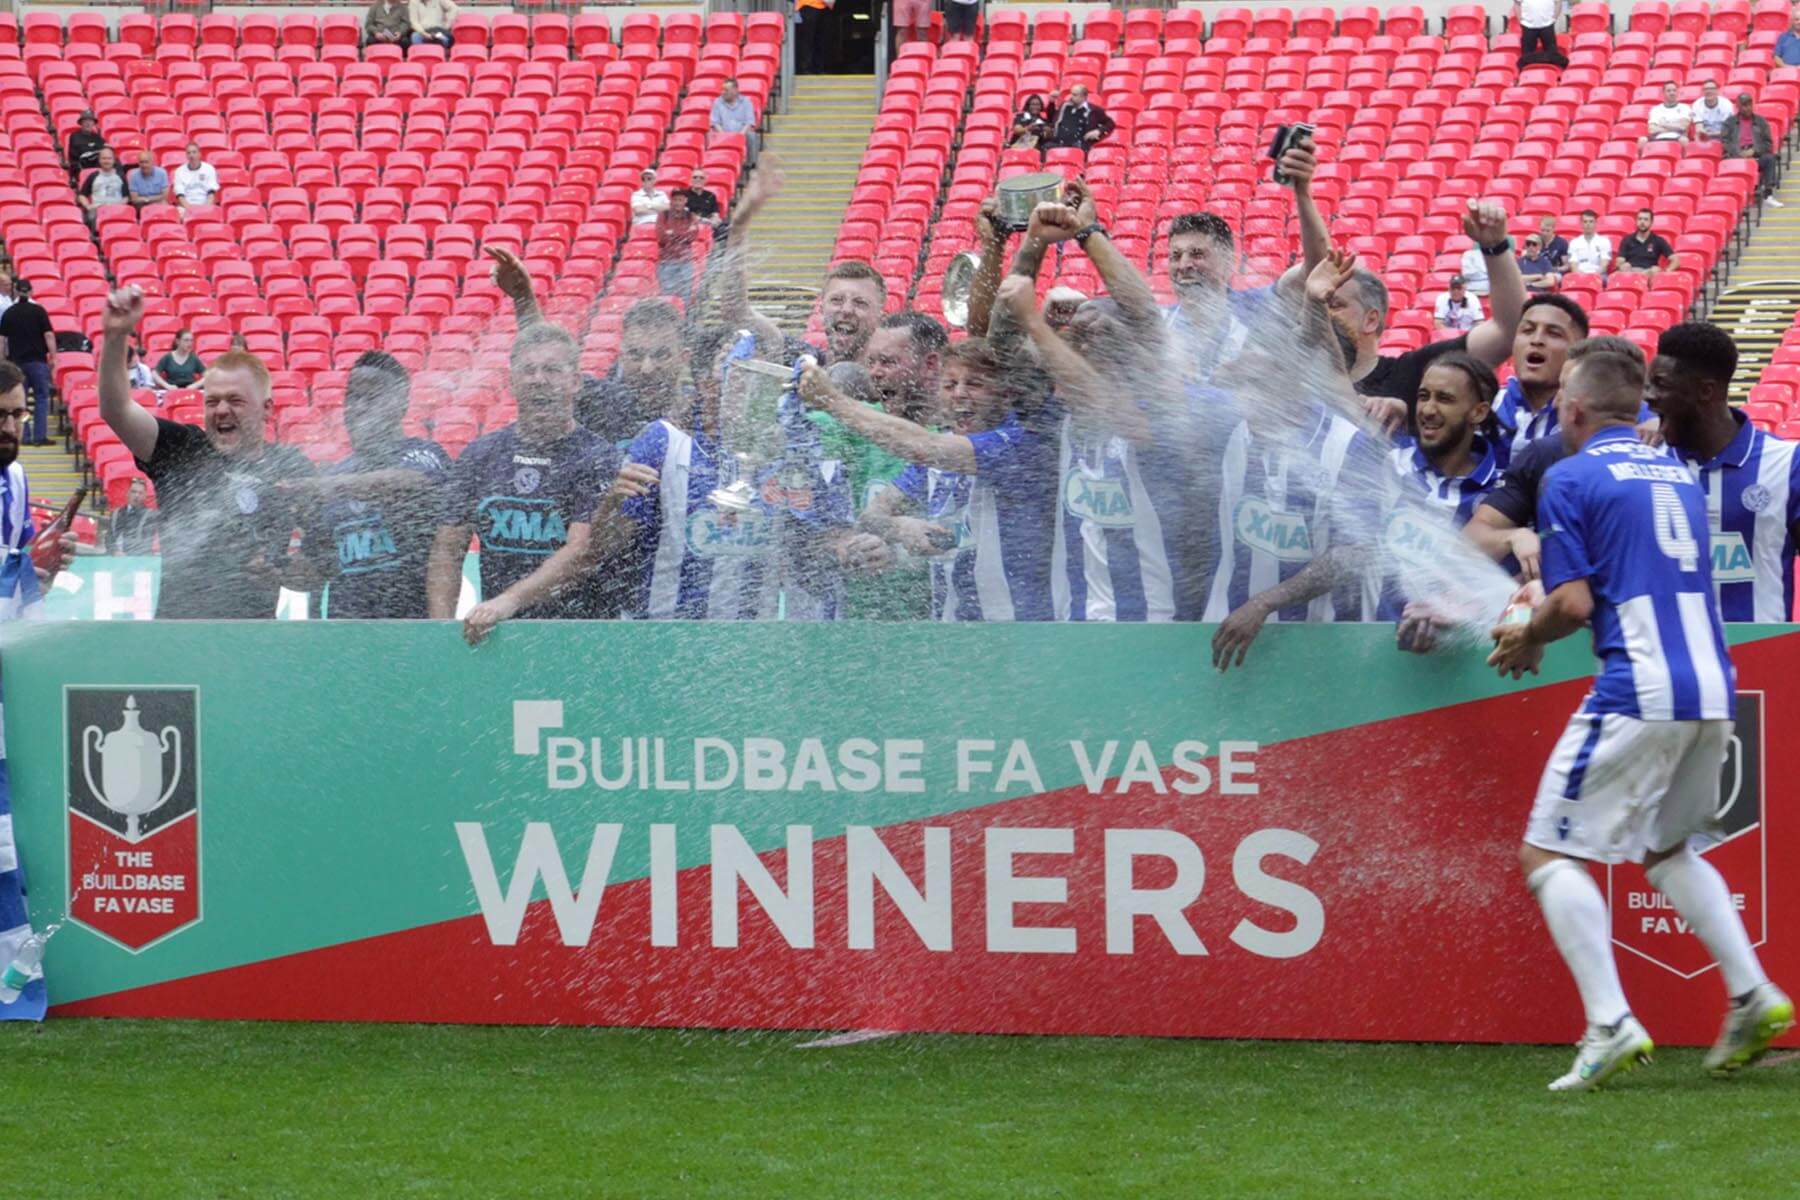 Standard Winners Podium Board Hire for FA Vase Winners Wembley 2019